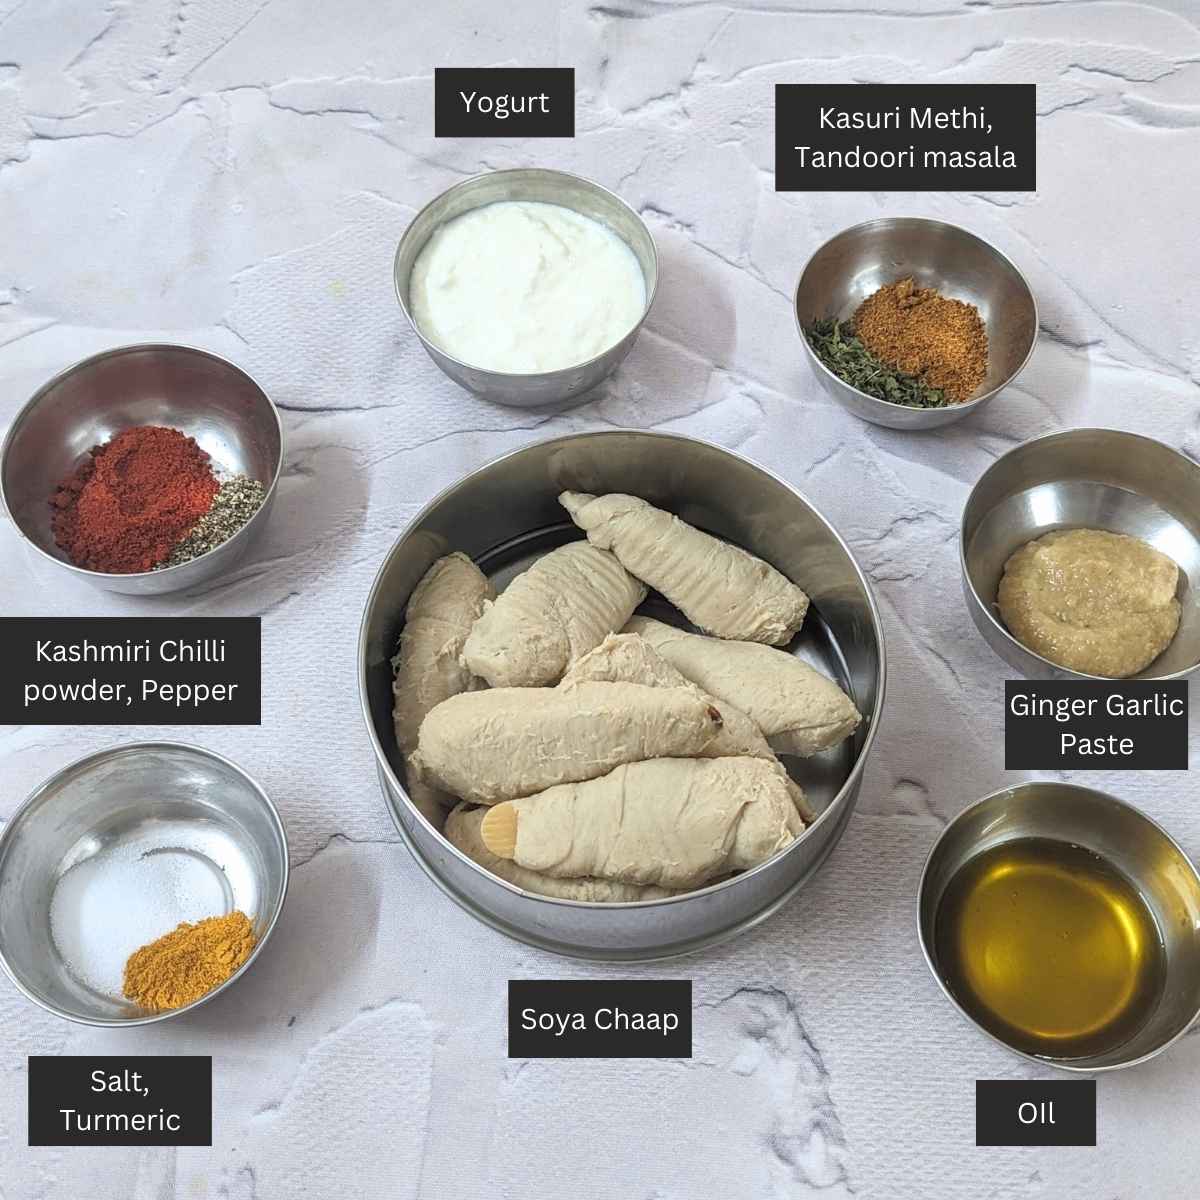 Ingredients for tandoori soya chaap.